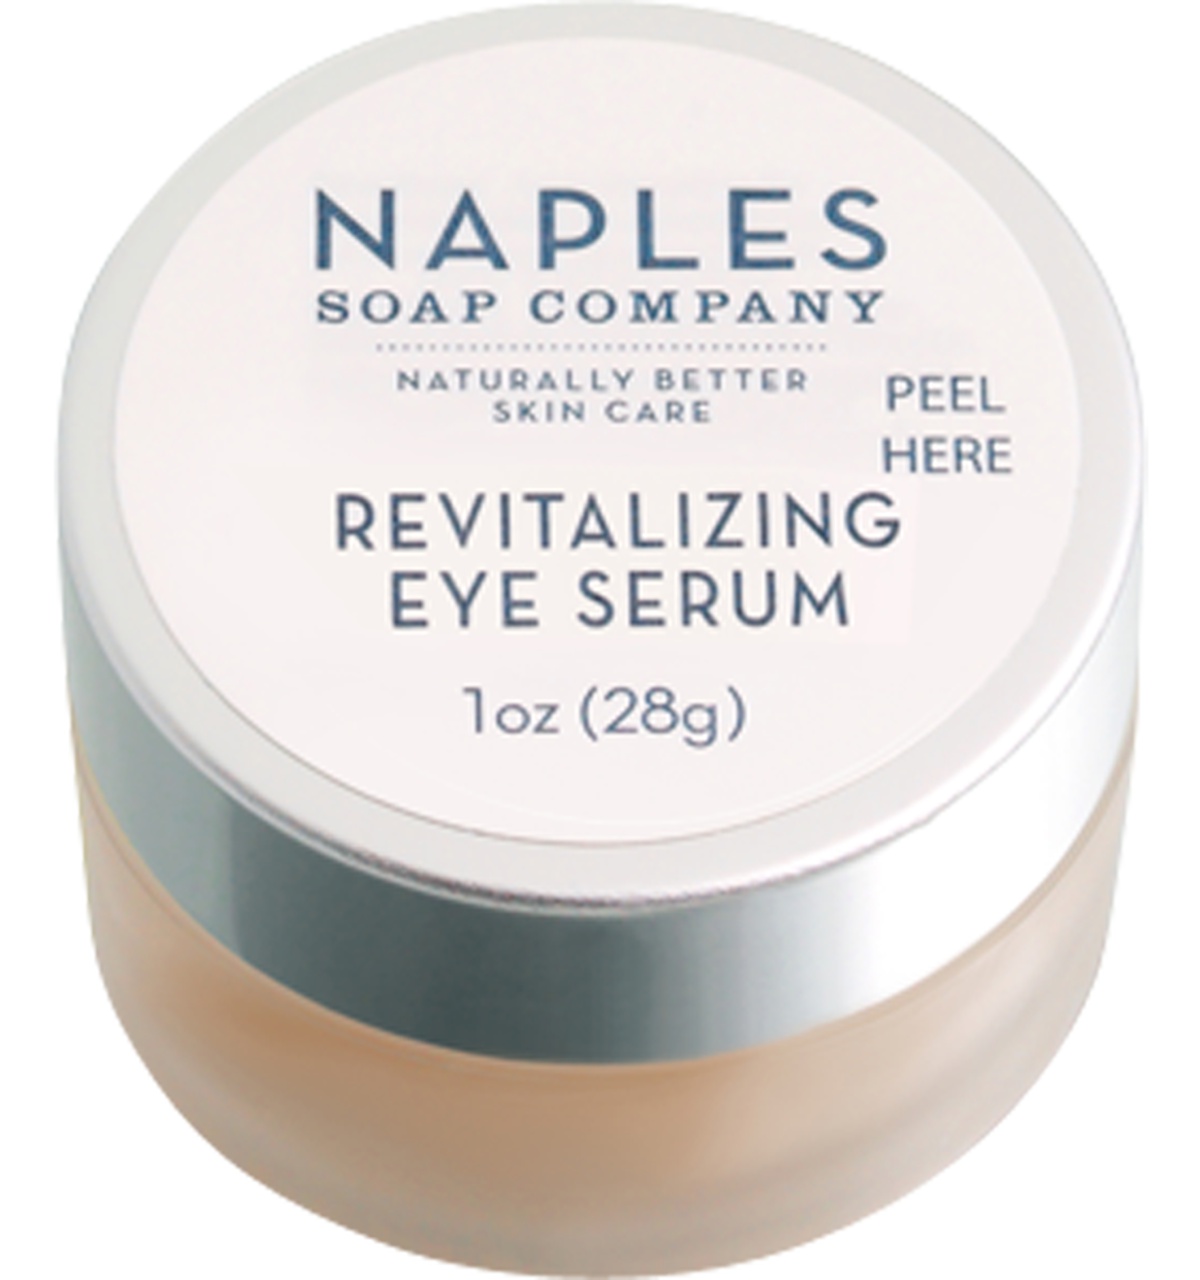 Naples Soap Company Eye Serum